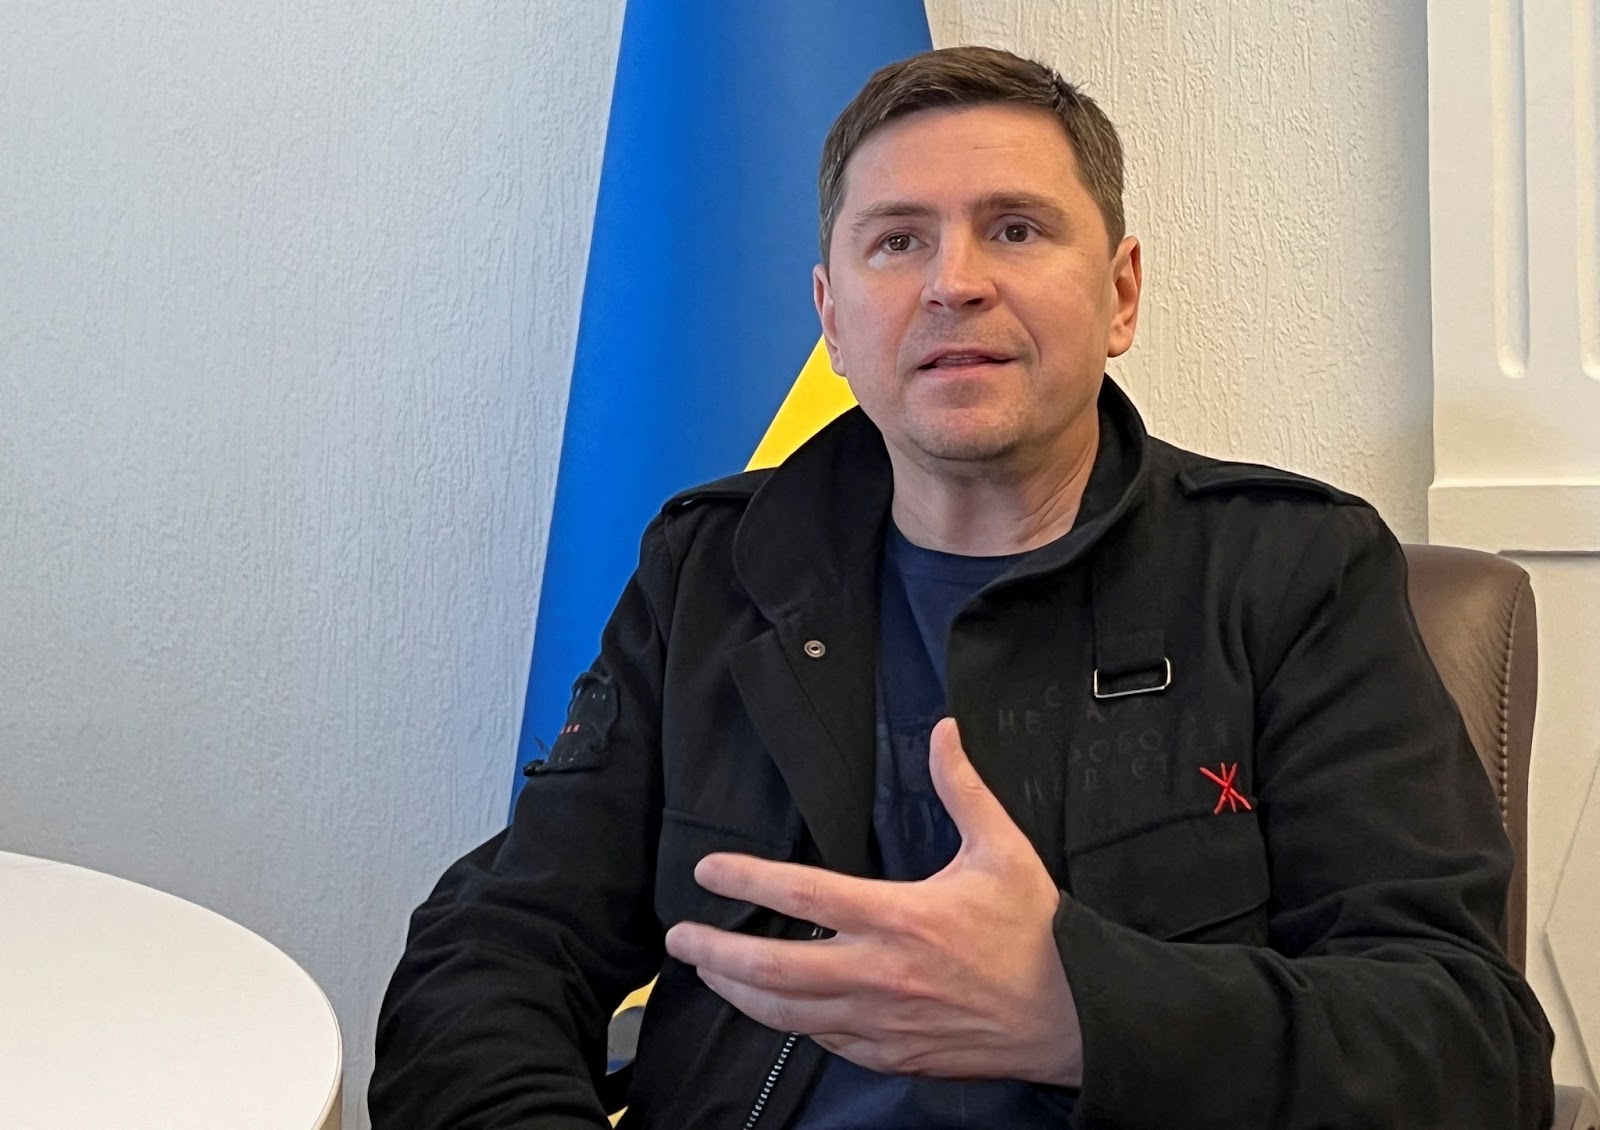 Mykhailo Podolyak, Ukraine presidential assistant